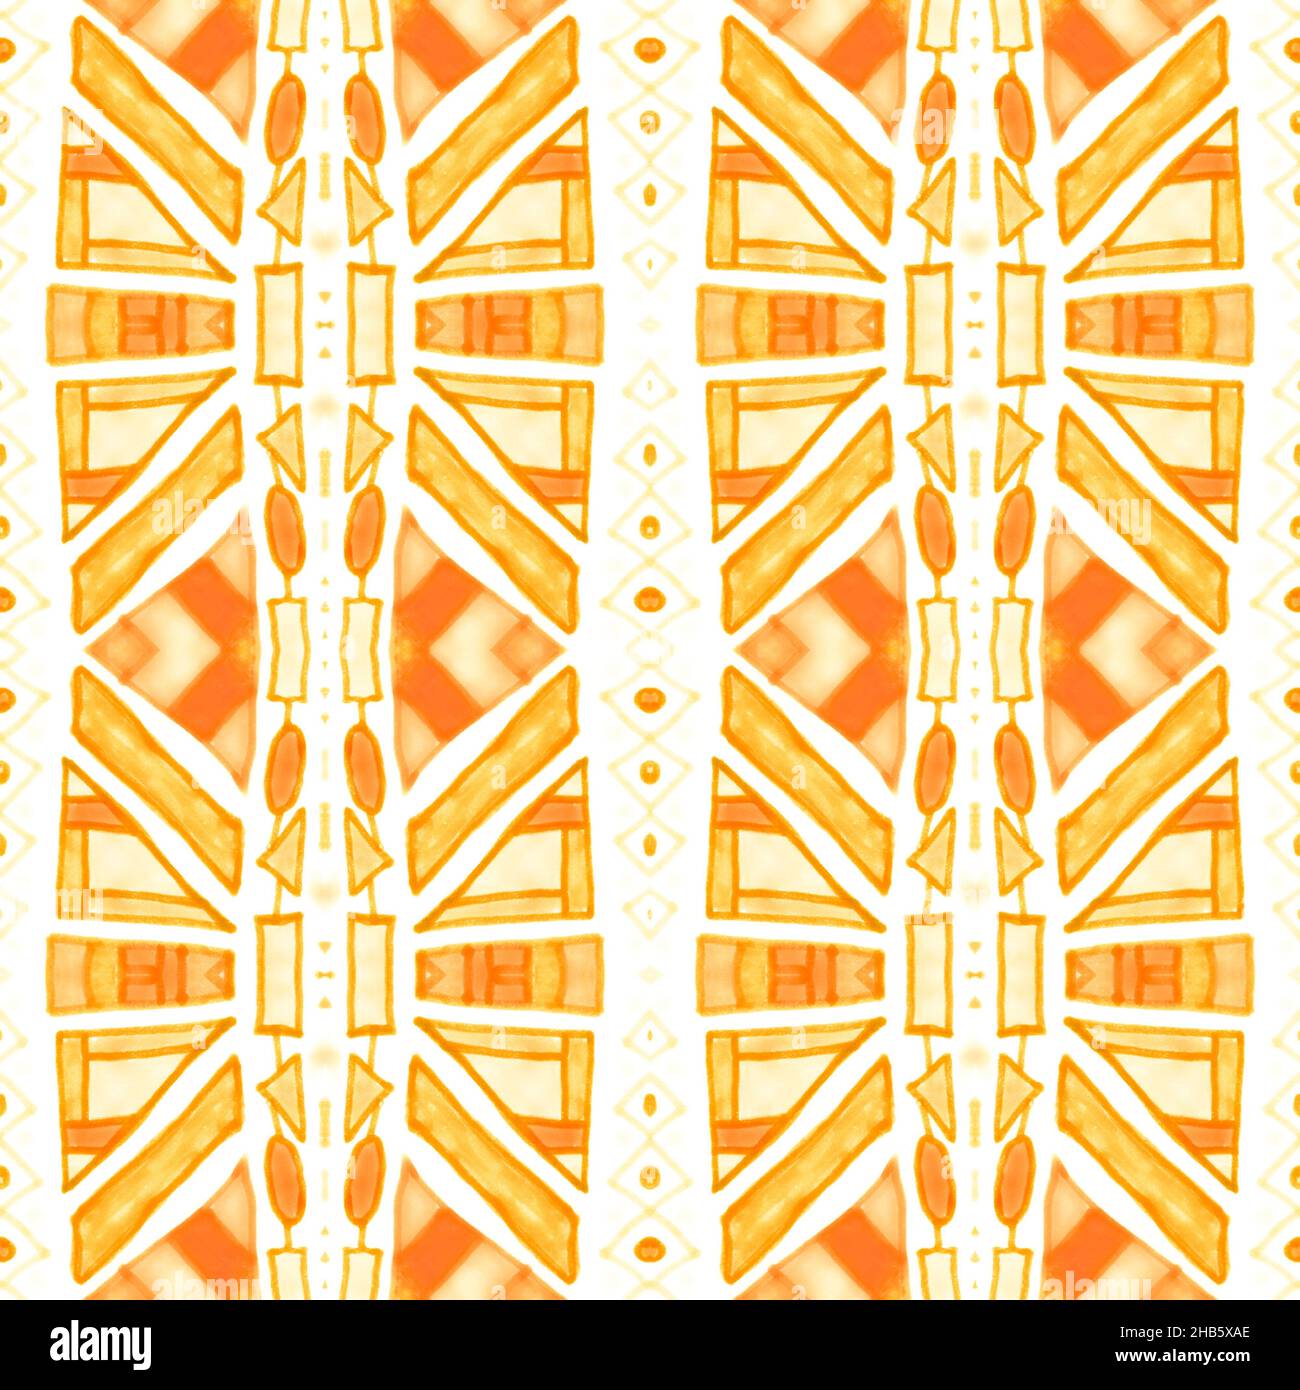 Navajo seamless pattern. Hand drawn ethnic background. Stock Photo